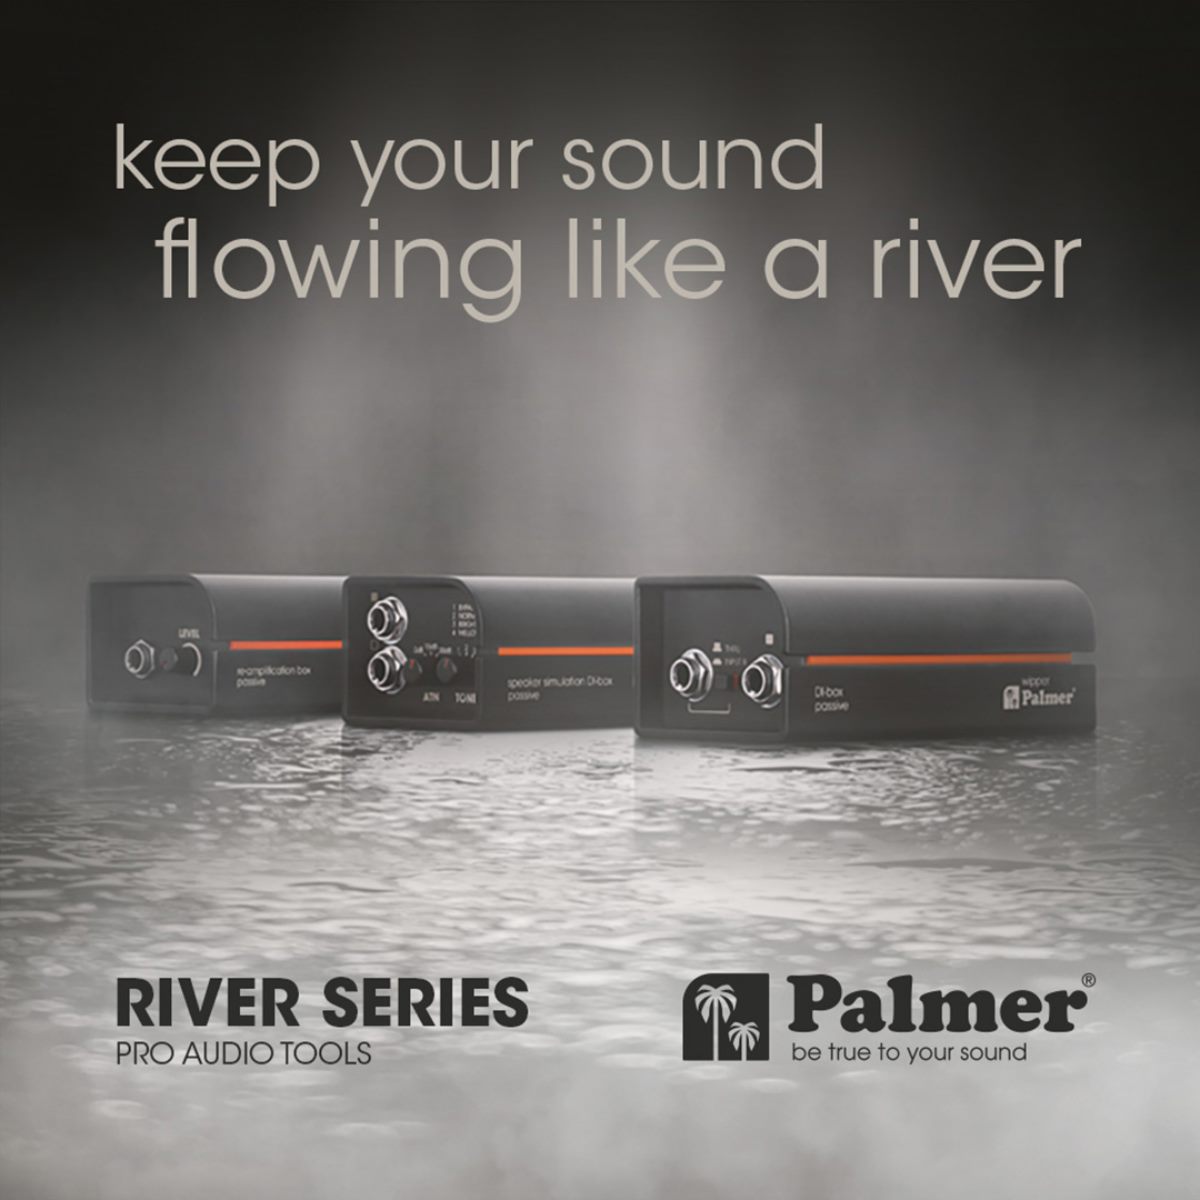 Serie Palmer River en aluminio ya disponibles, be true to your sound